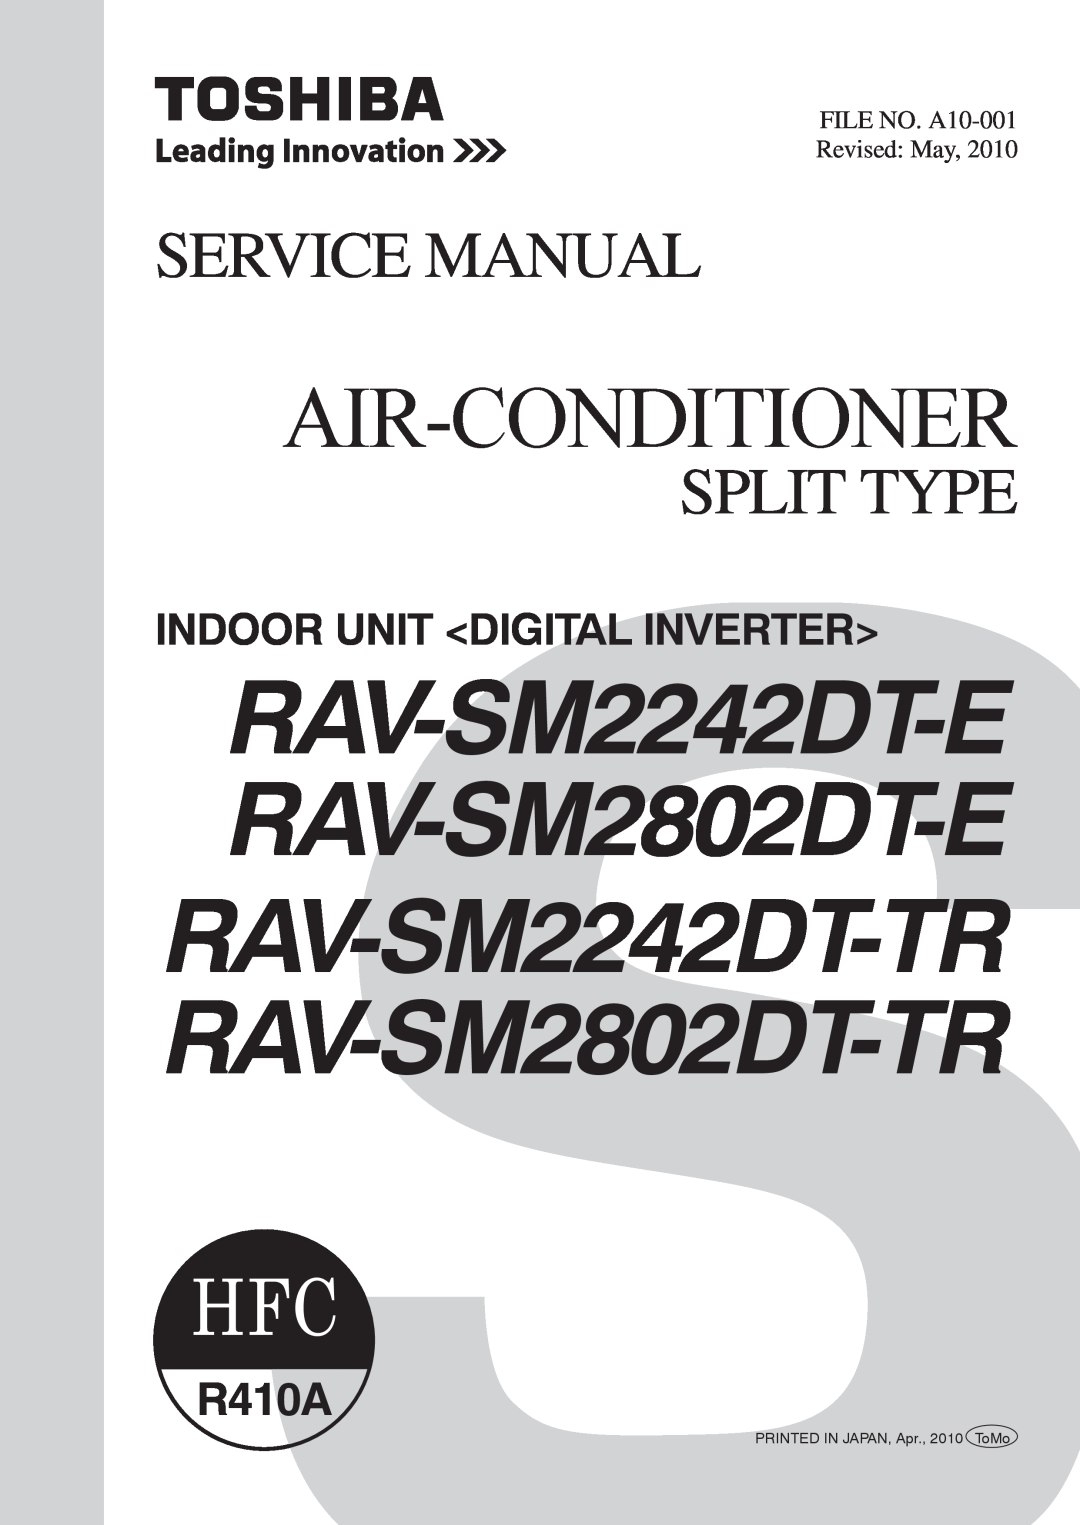 Toshiba installation manual Air Conditioner Split Type, RAV-SM2242DT-E RAV-SM2802DT-E, English, Français, Deutsch 